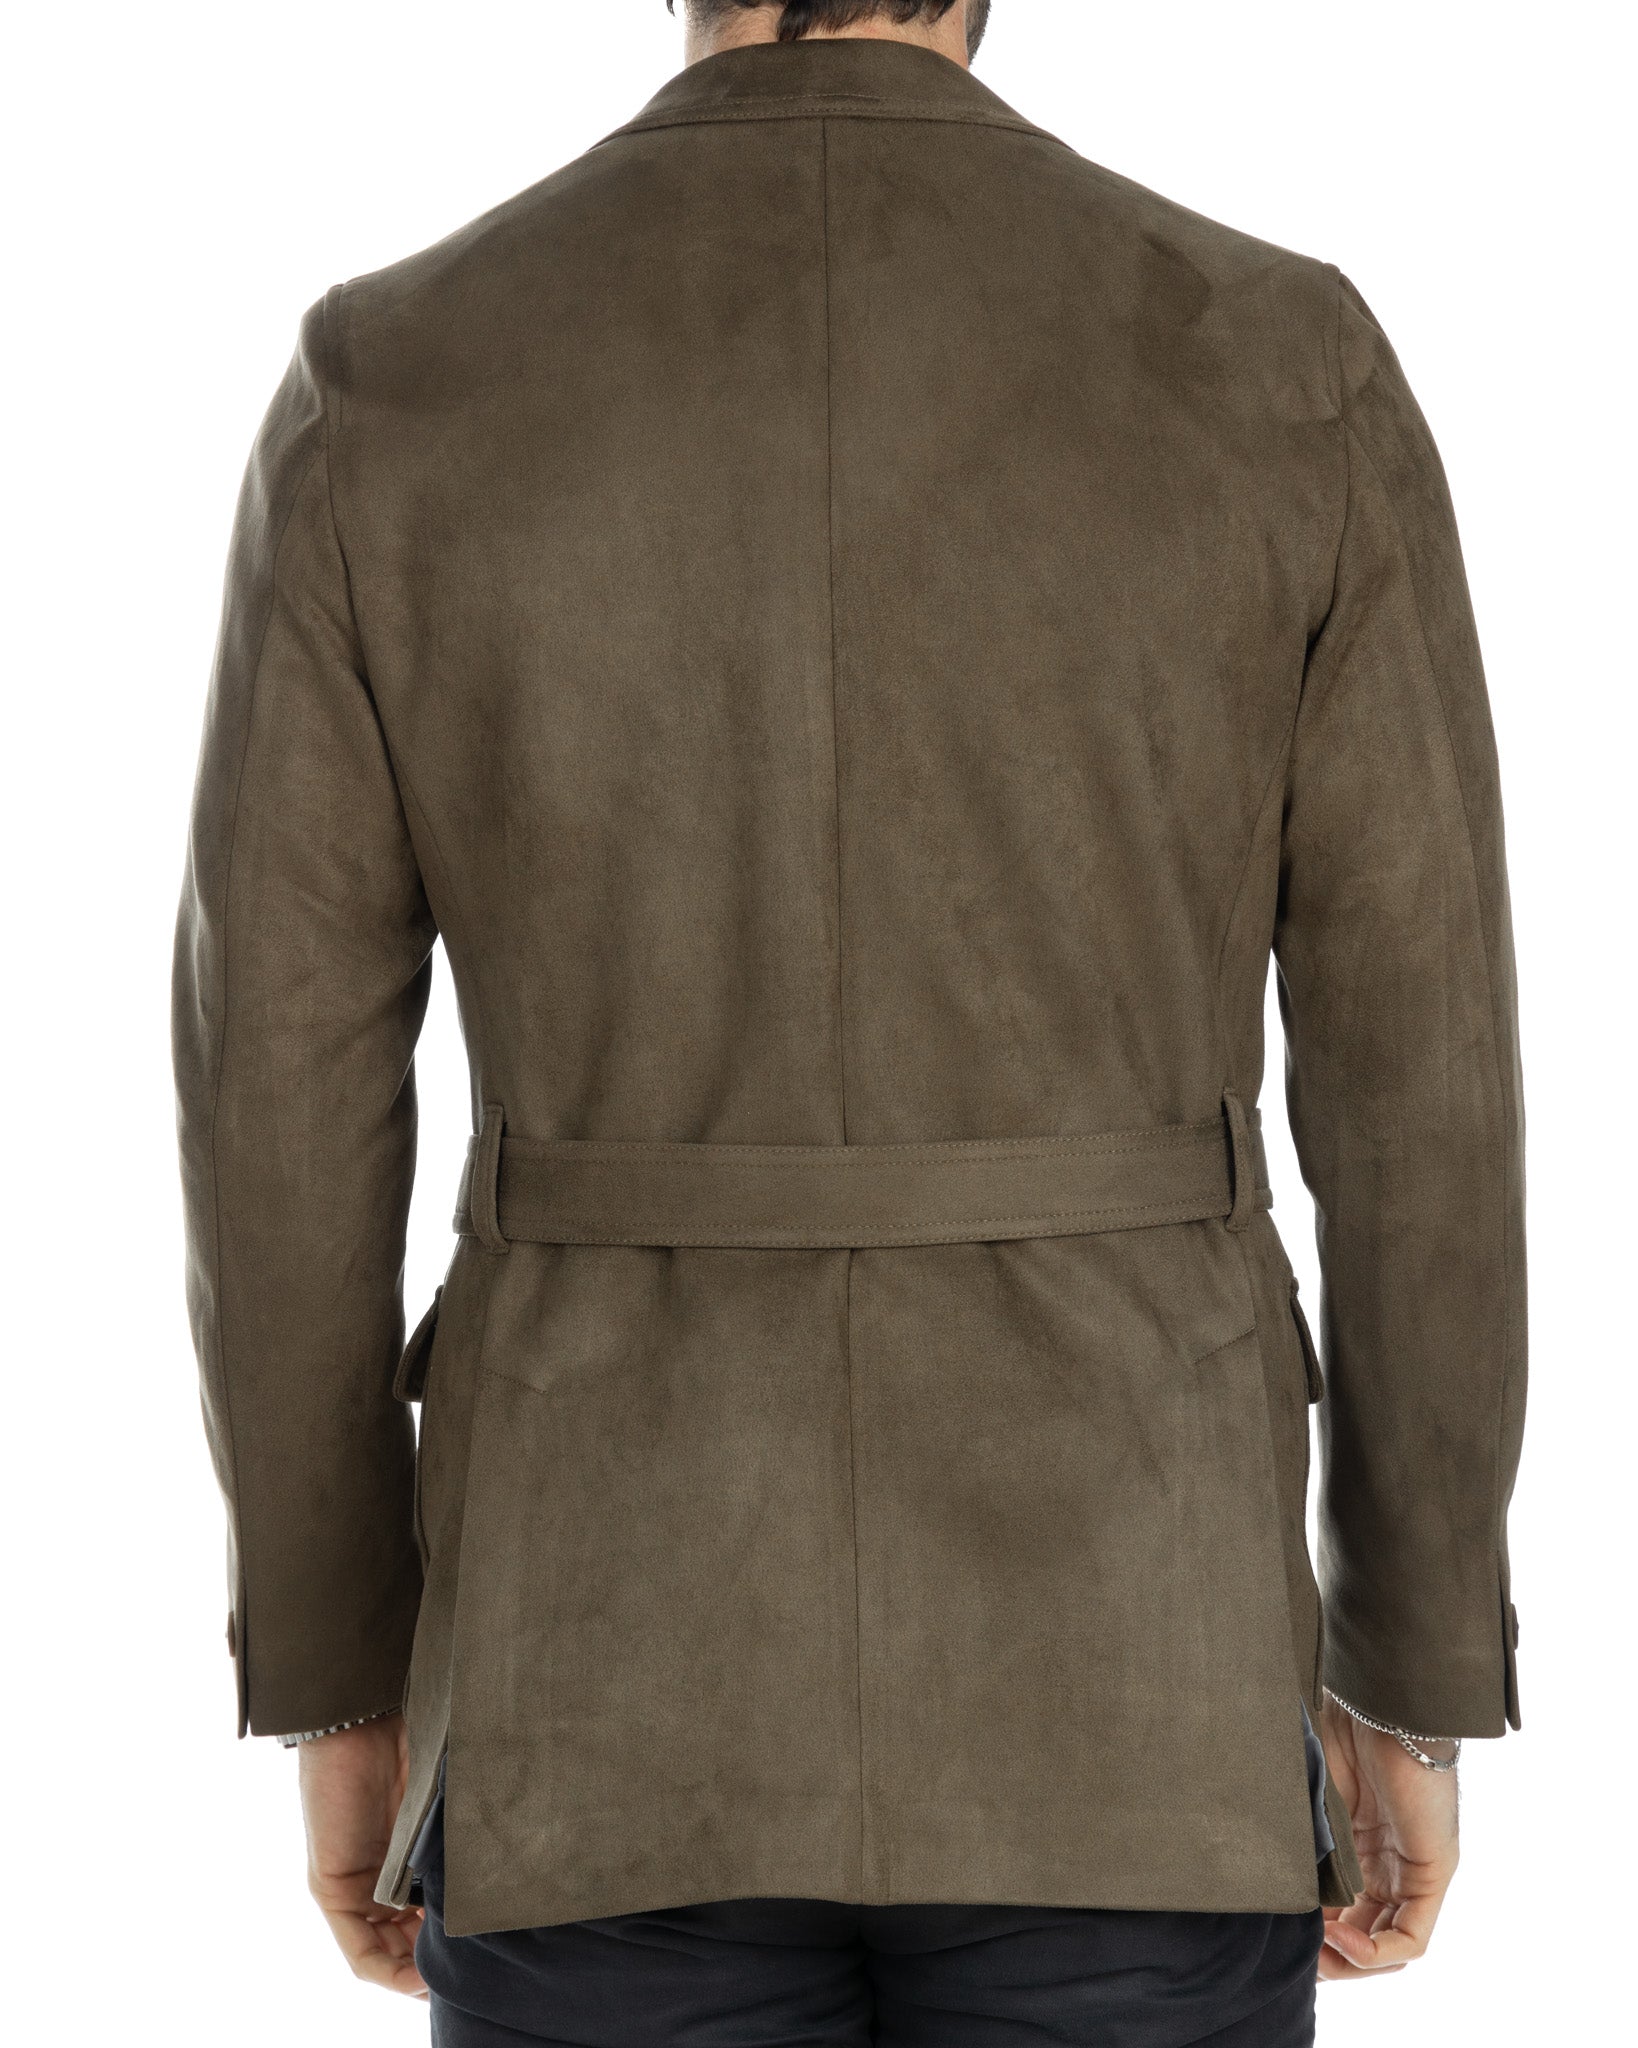 Levante - safari jacket in military eco-suede